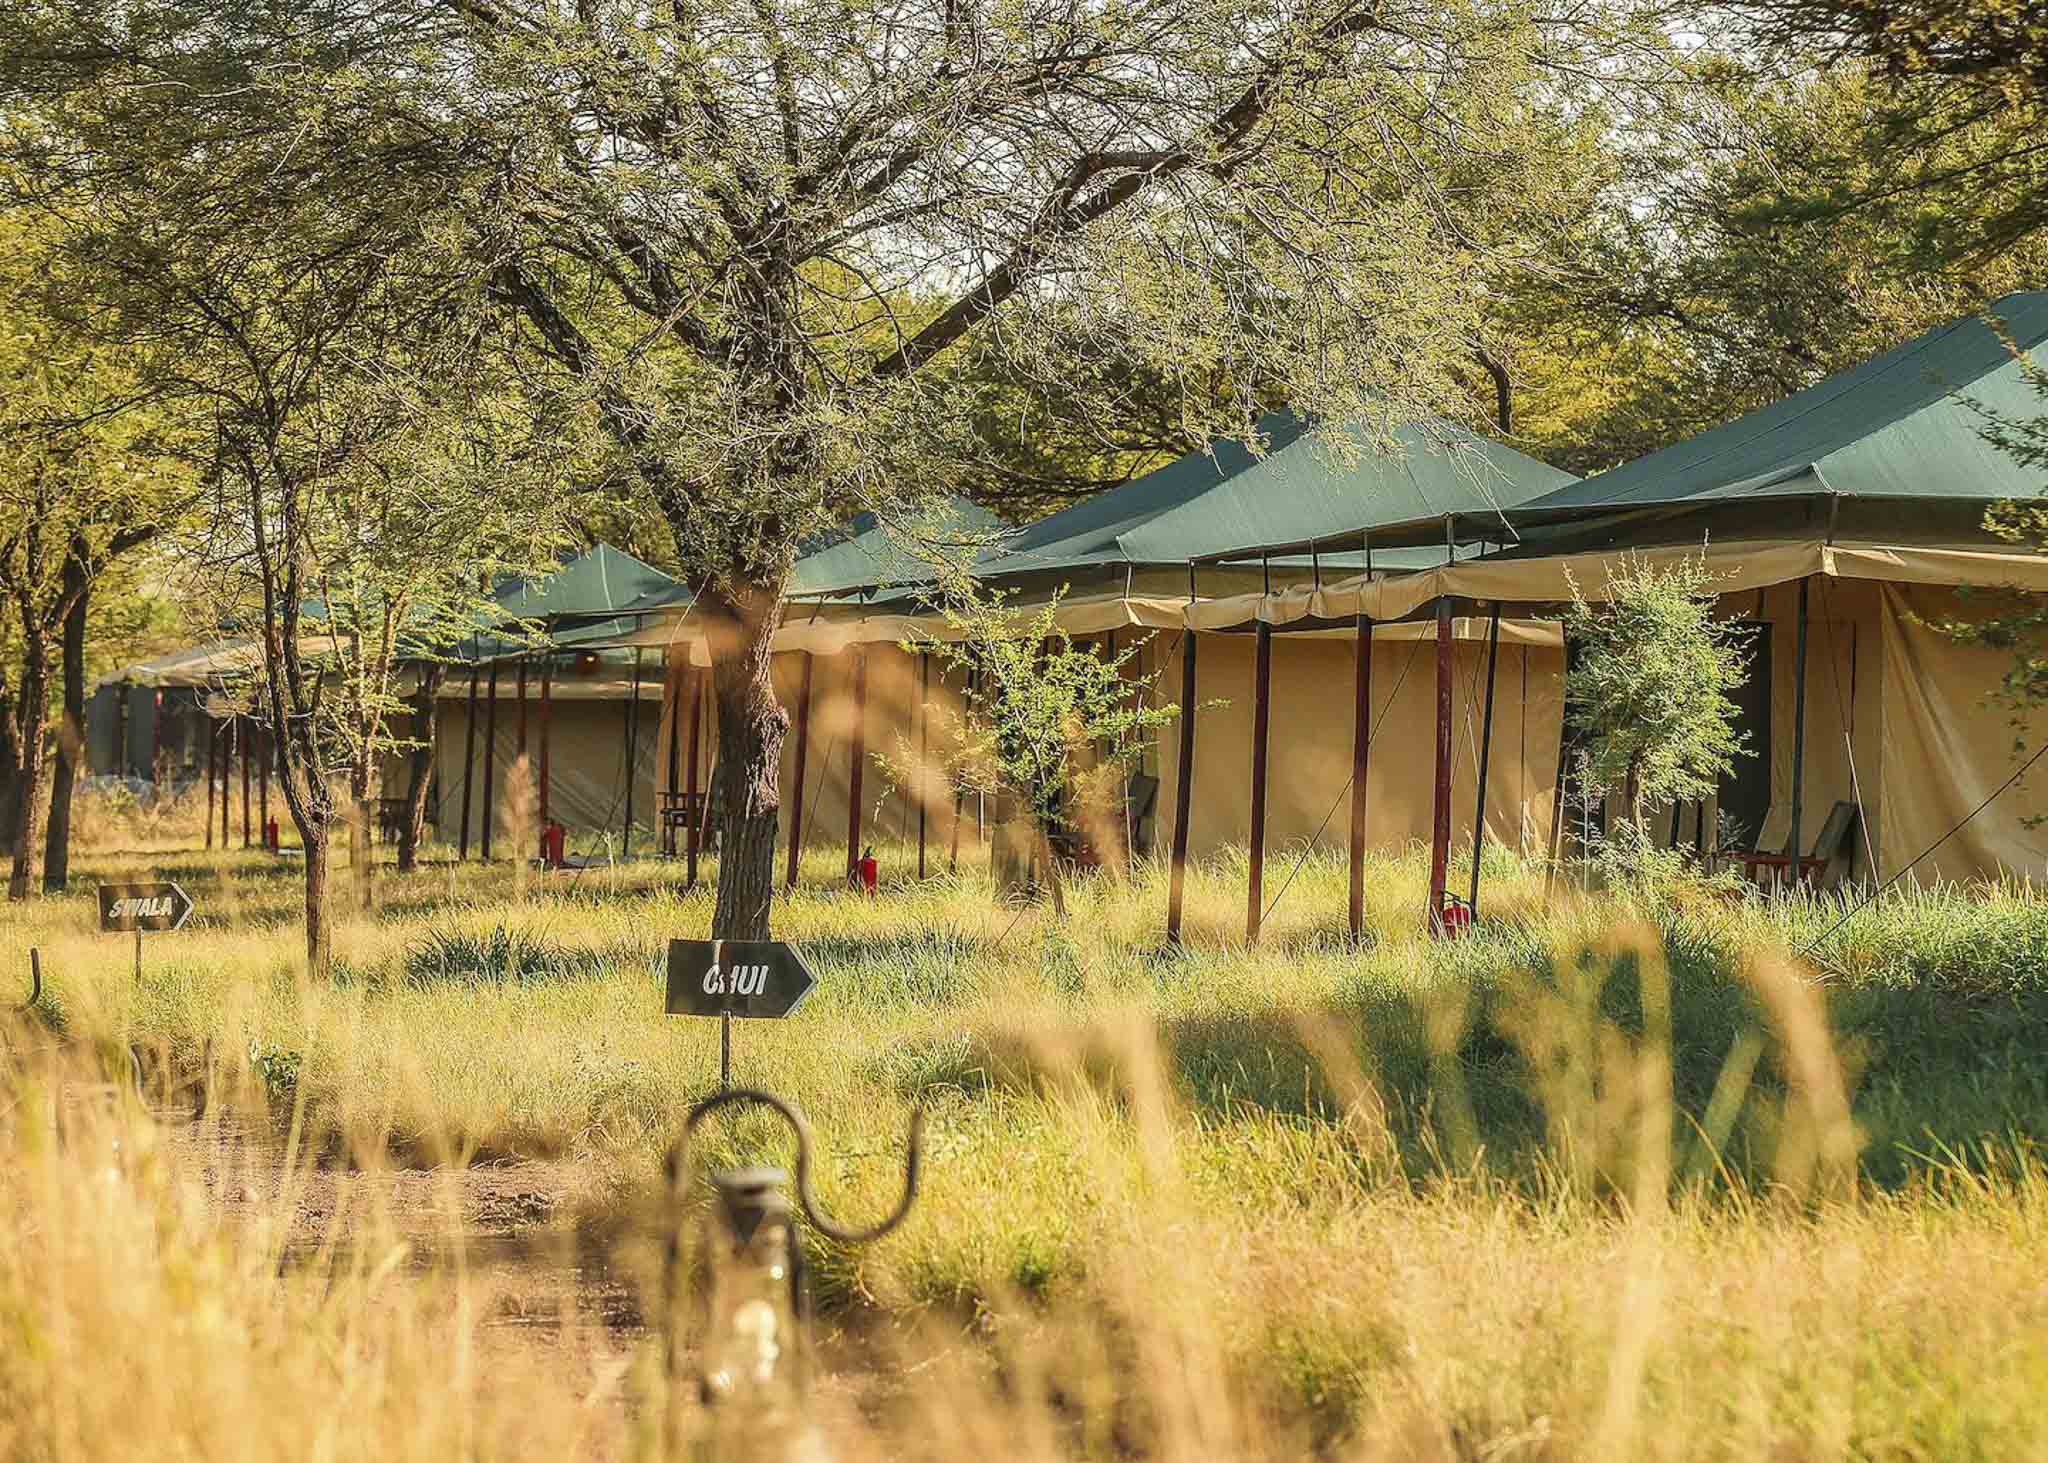 Tukaone Camp Serengeti, Tanzania